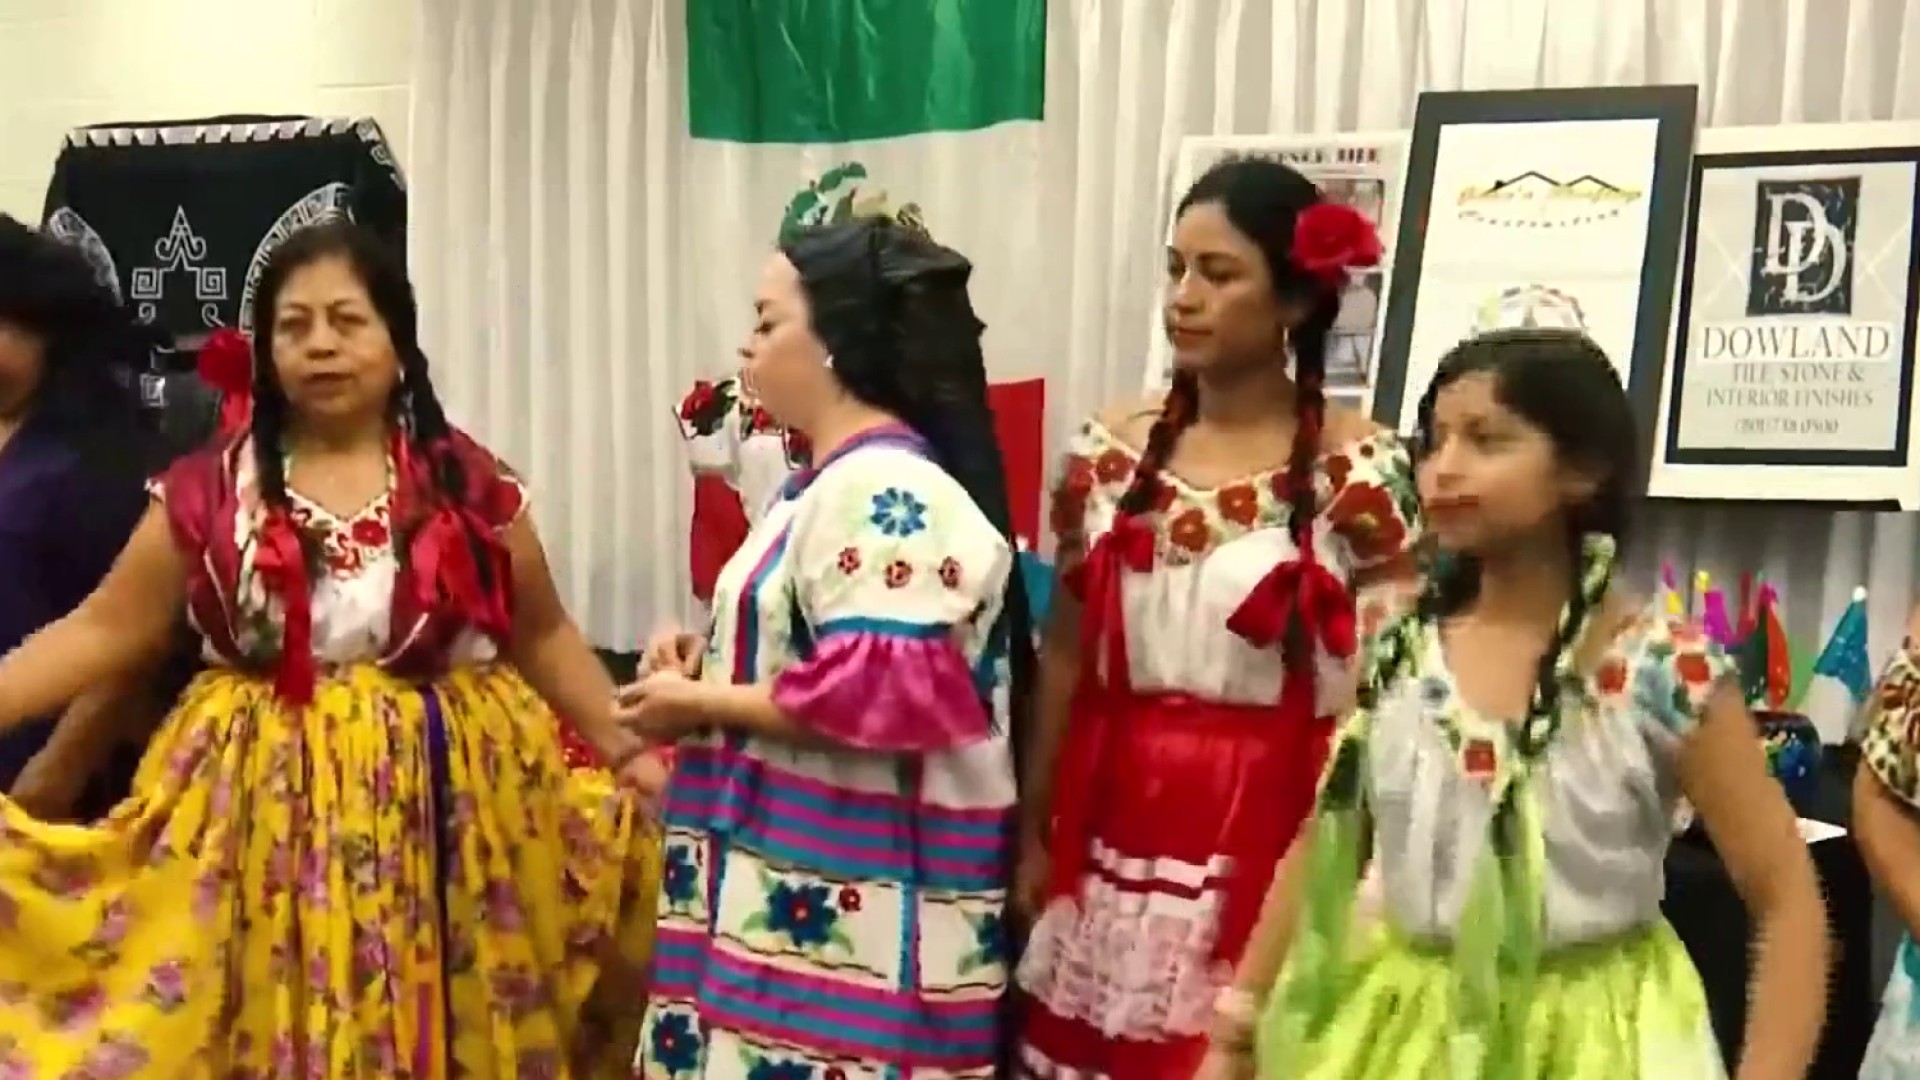 Mes de la herencia hispana: Grupo “Oaxaca en mi” celebra su cultura en Utah  – Telemundo Utah